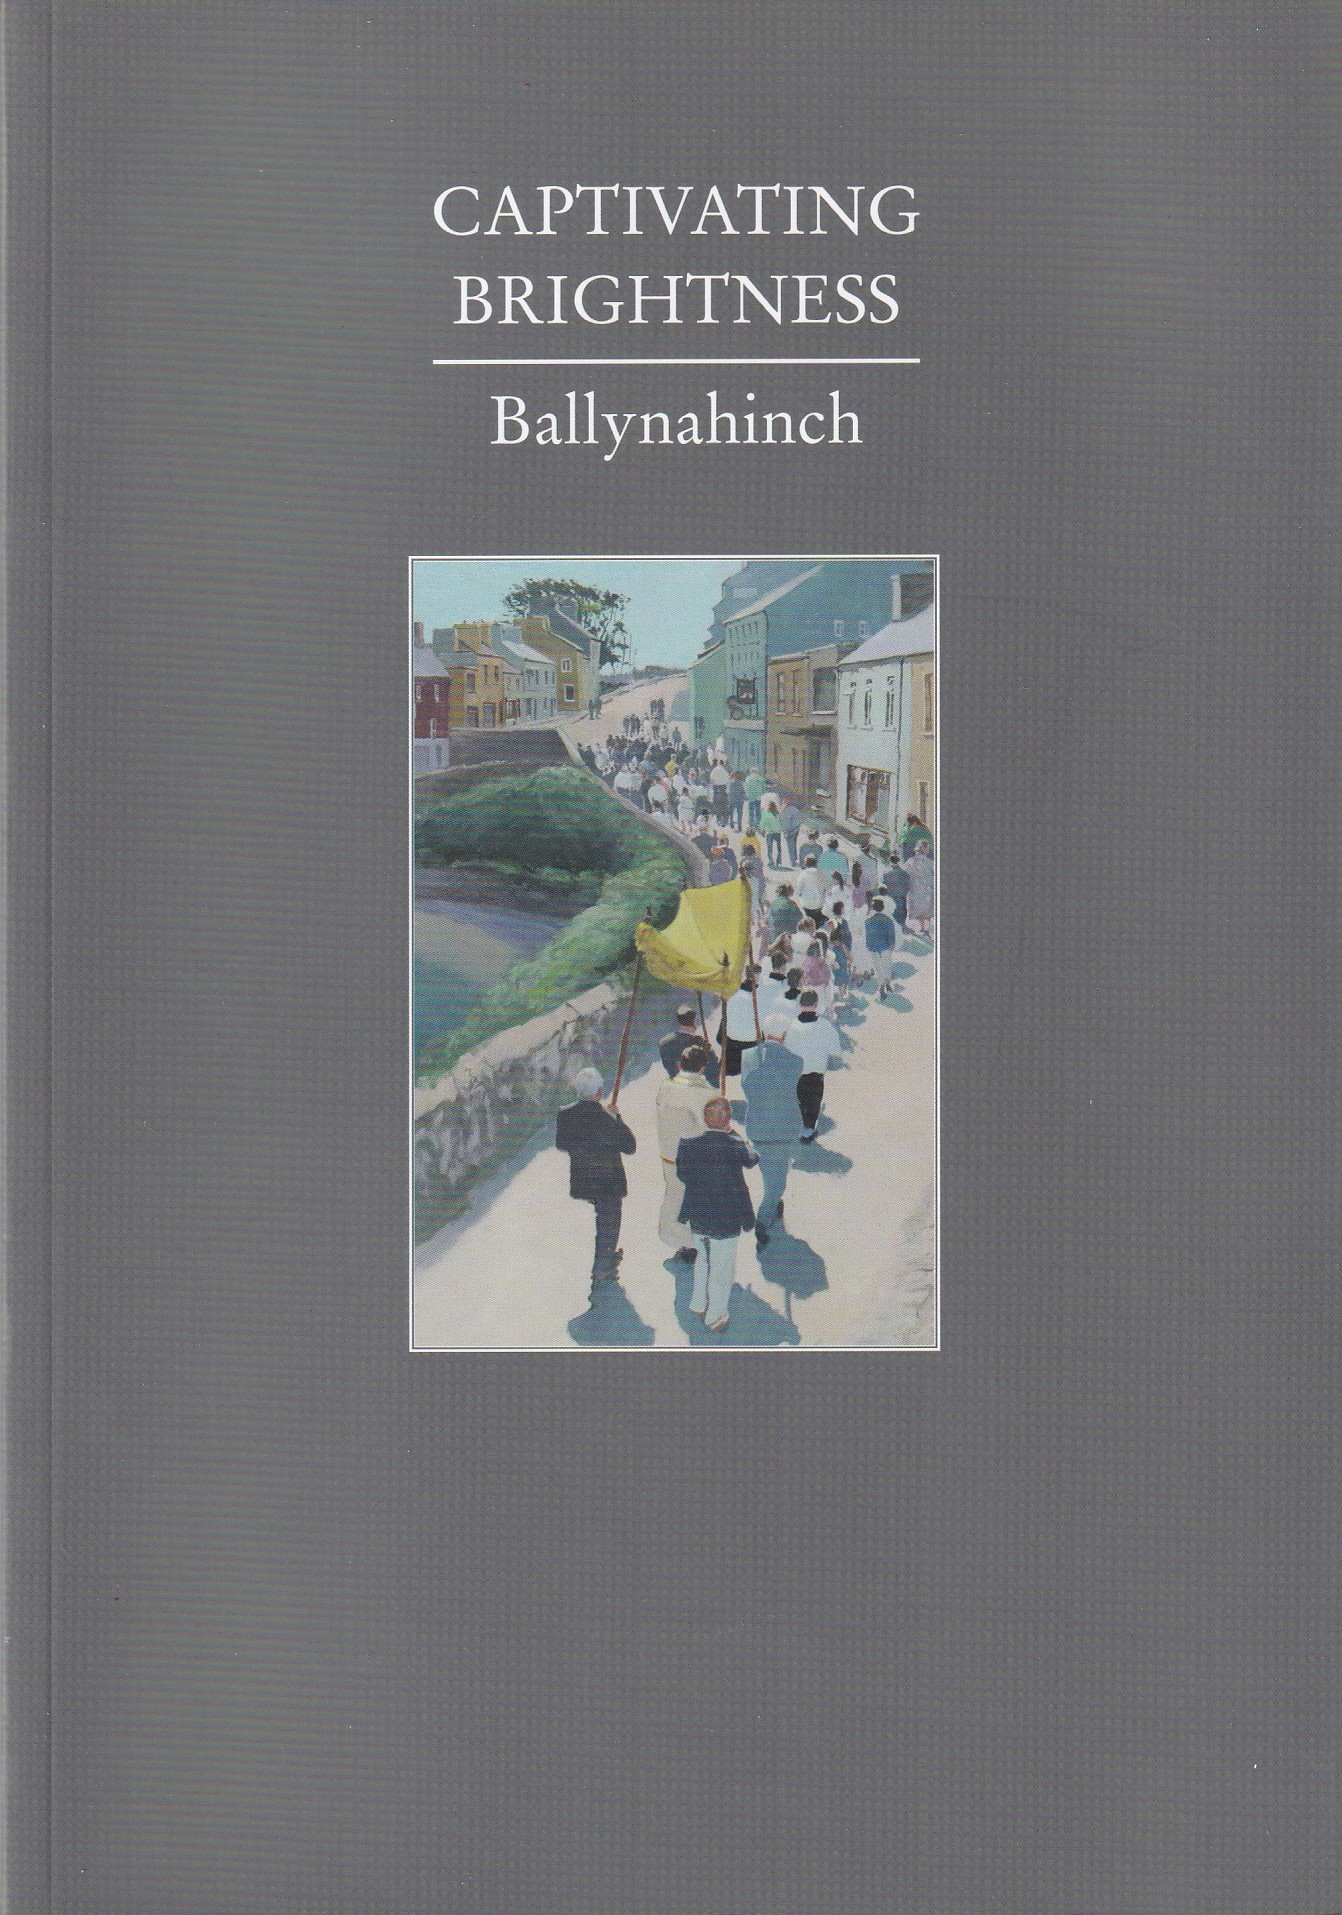 Captivating Brightness: Ballynahinch | Ed. Des Lally | Charlie Byrne's